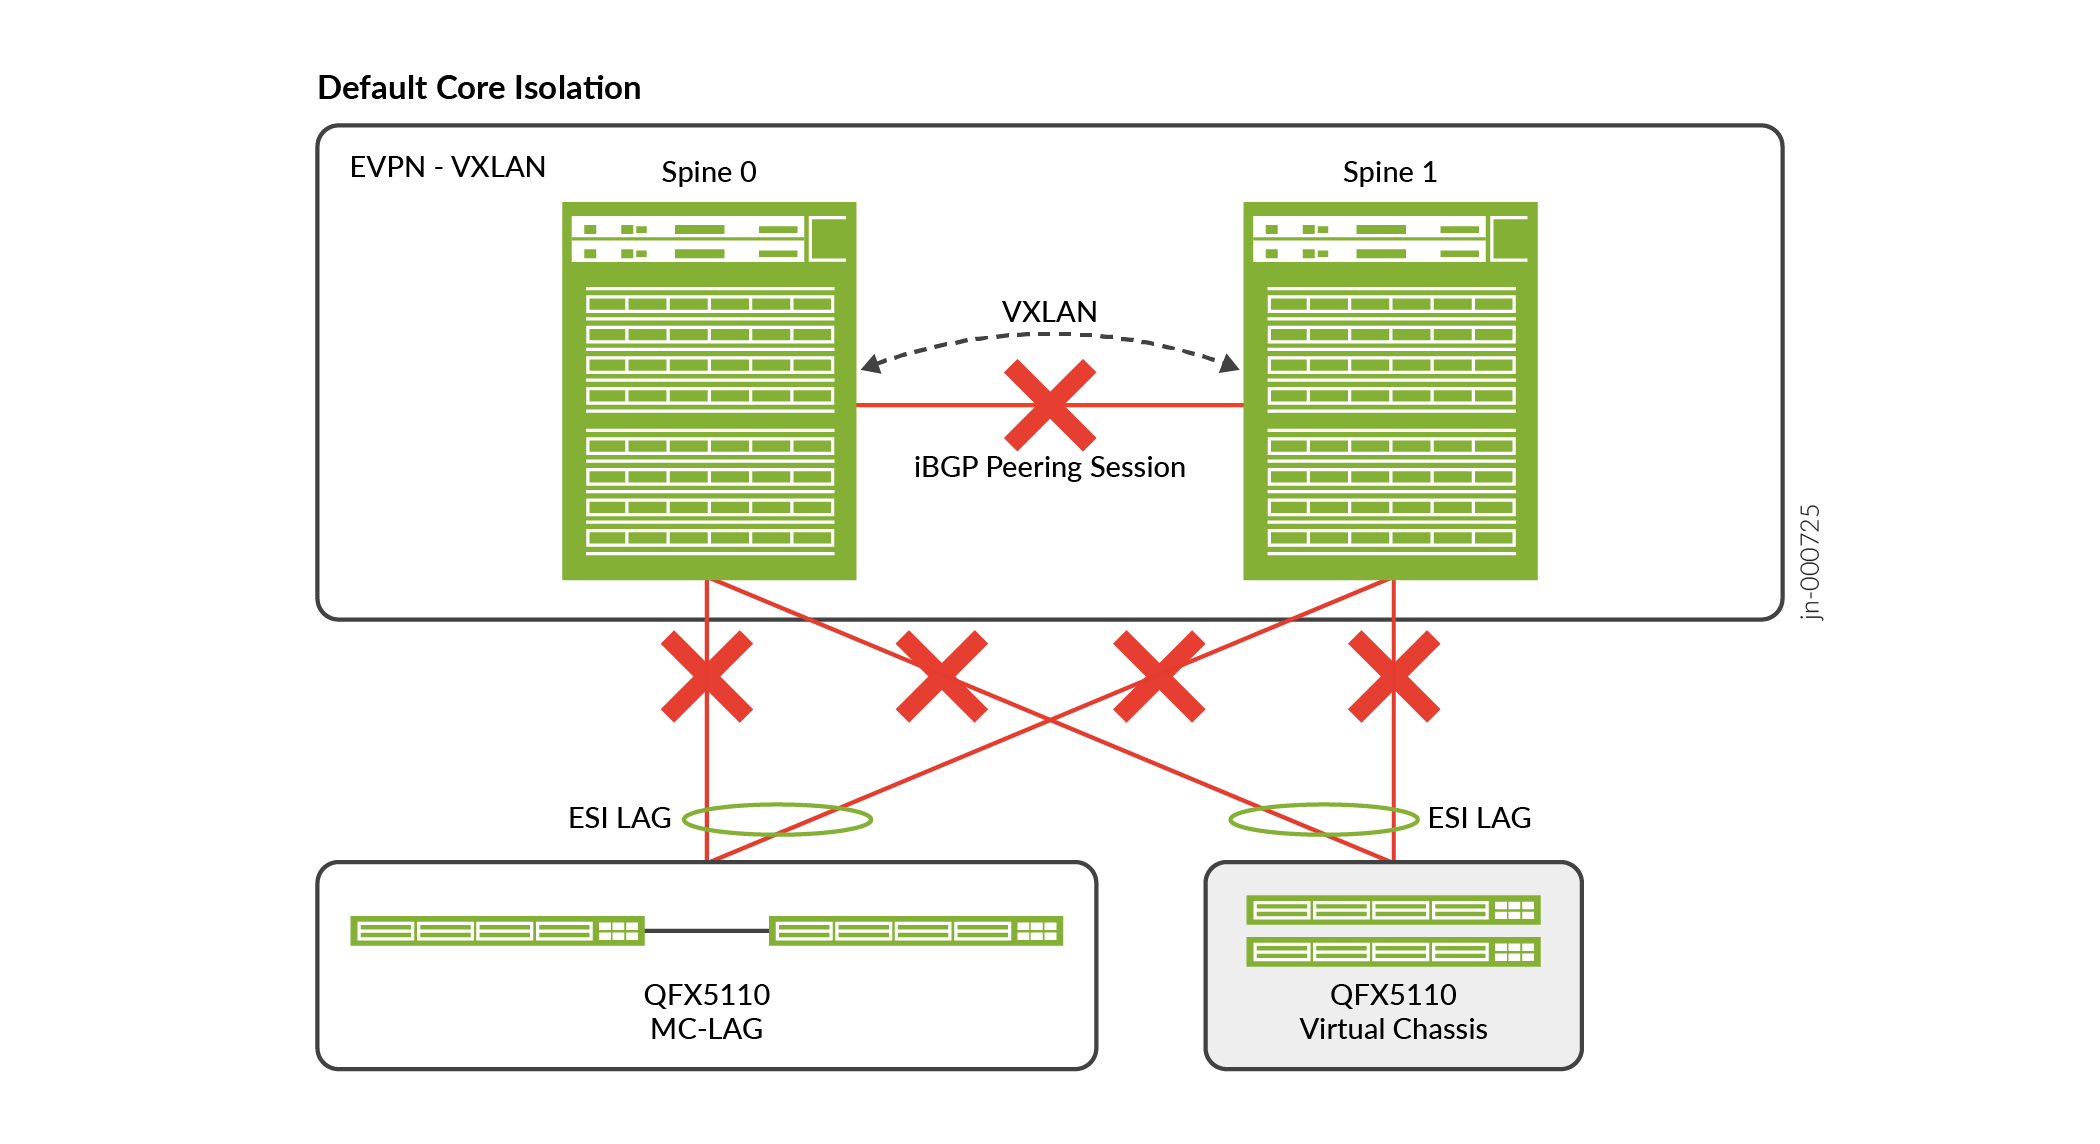 EVPN-VXLAN Default Core Isolation